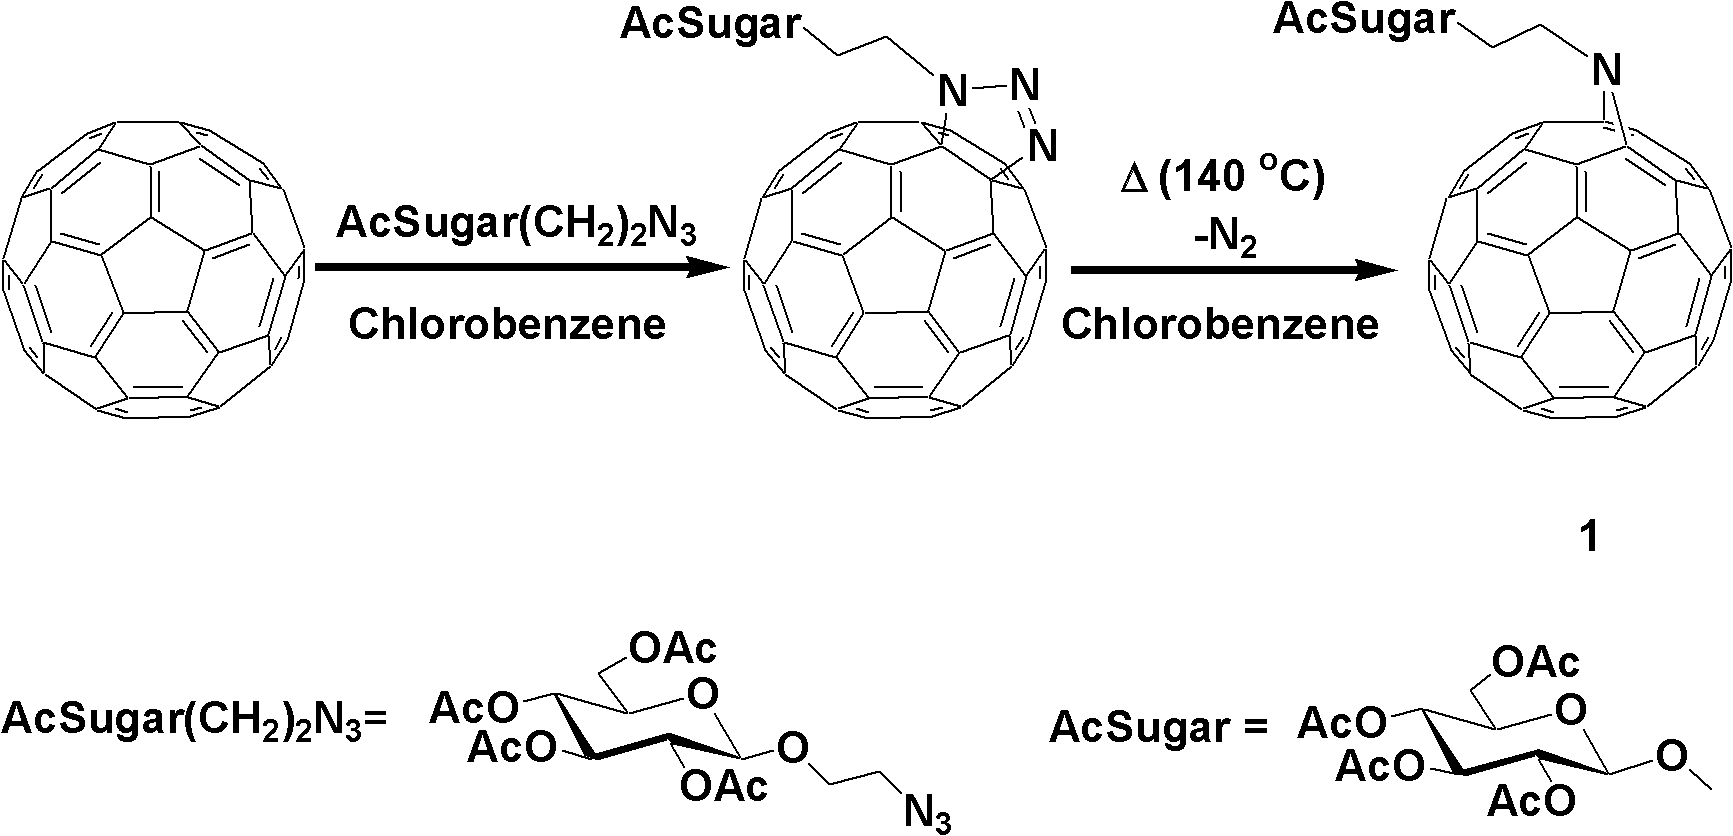 Fullerene polysaccharide derivative and its preparation method